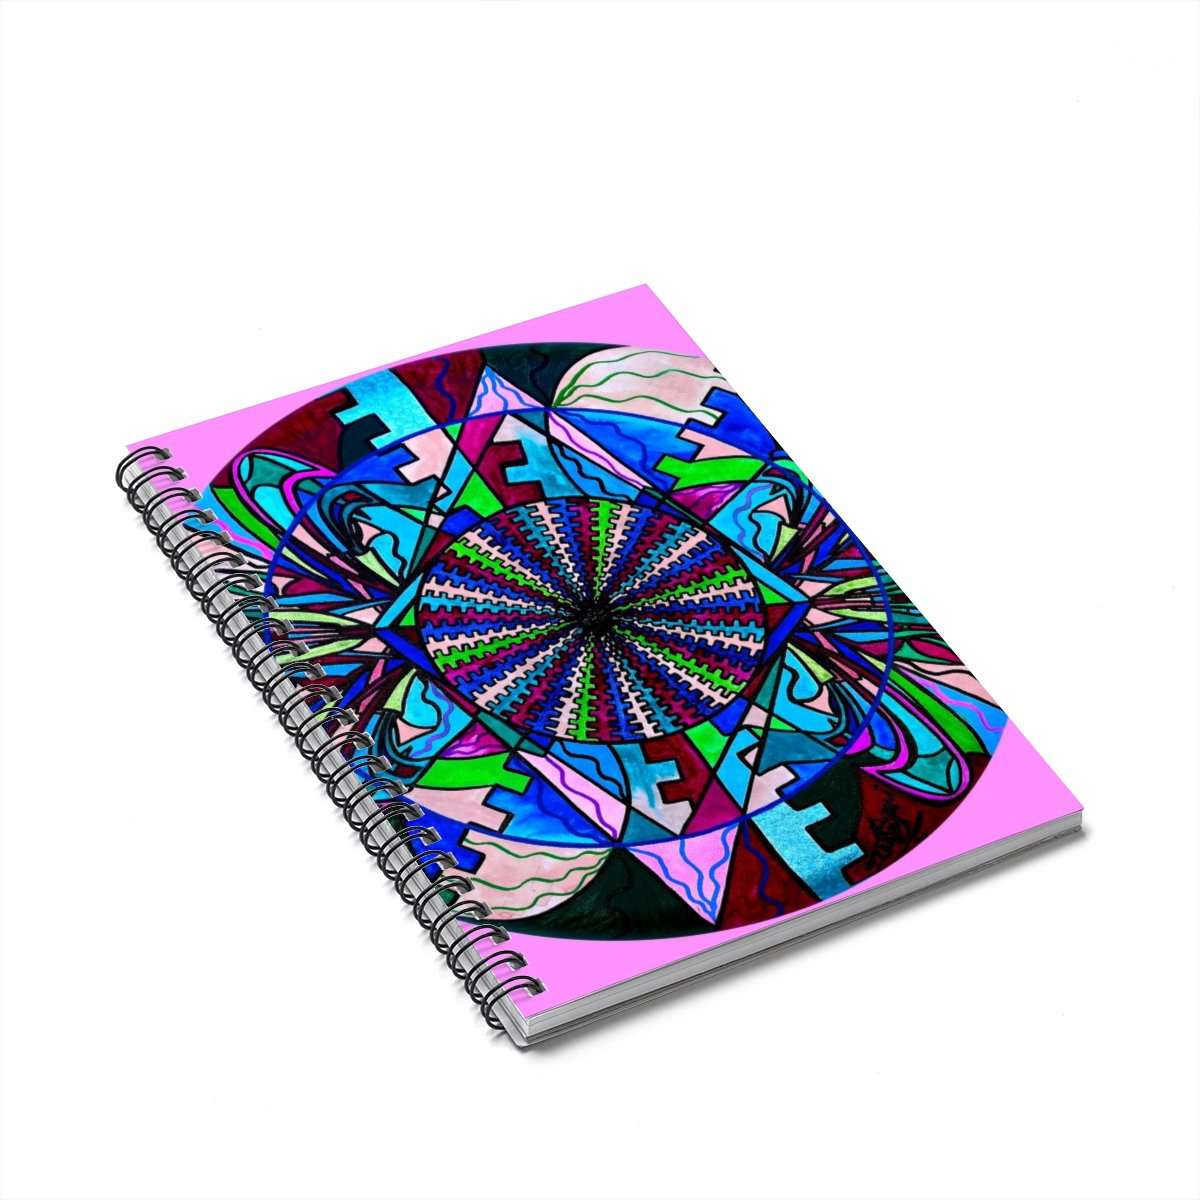 Integrační model - Spiral Notebook